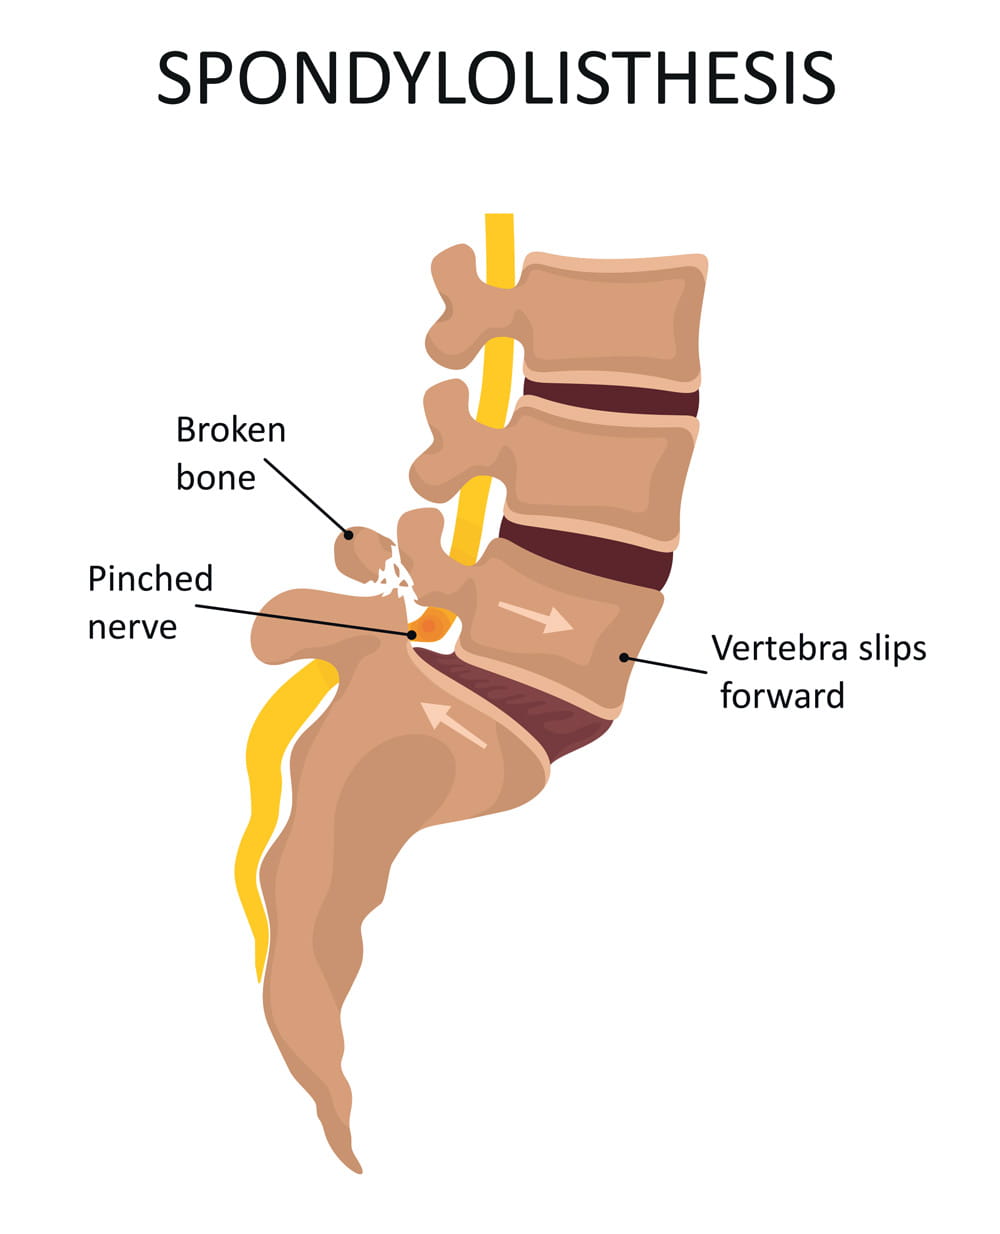 An illustration showing spondylolisthesis in the spine